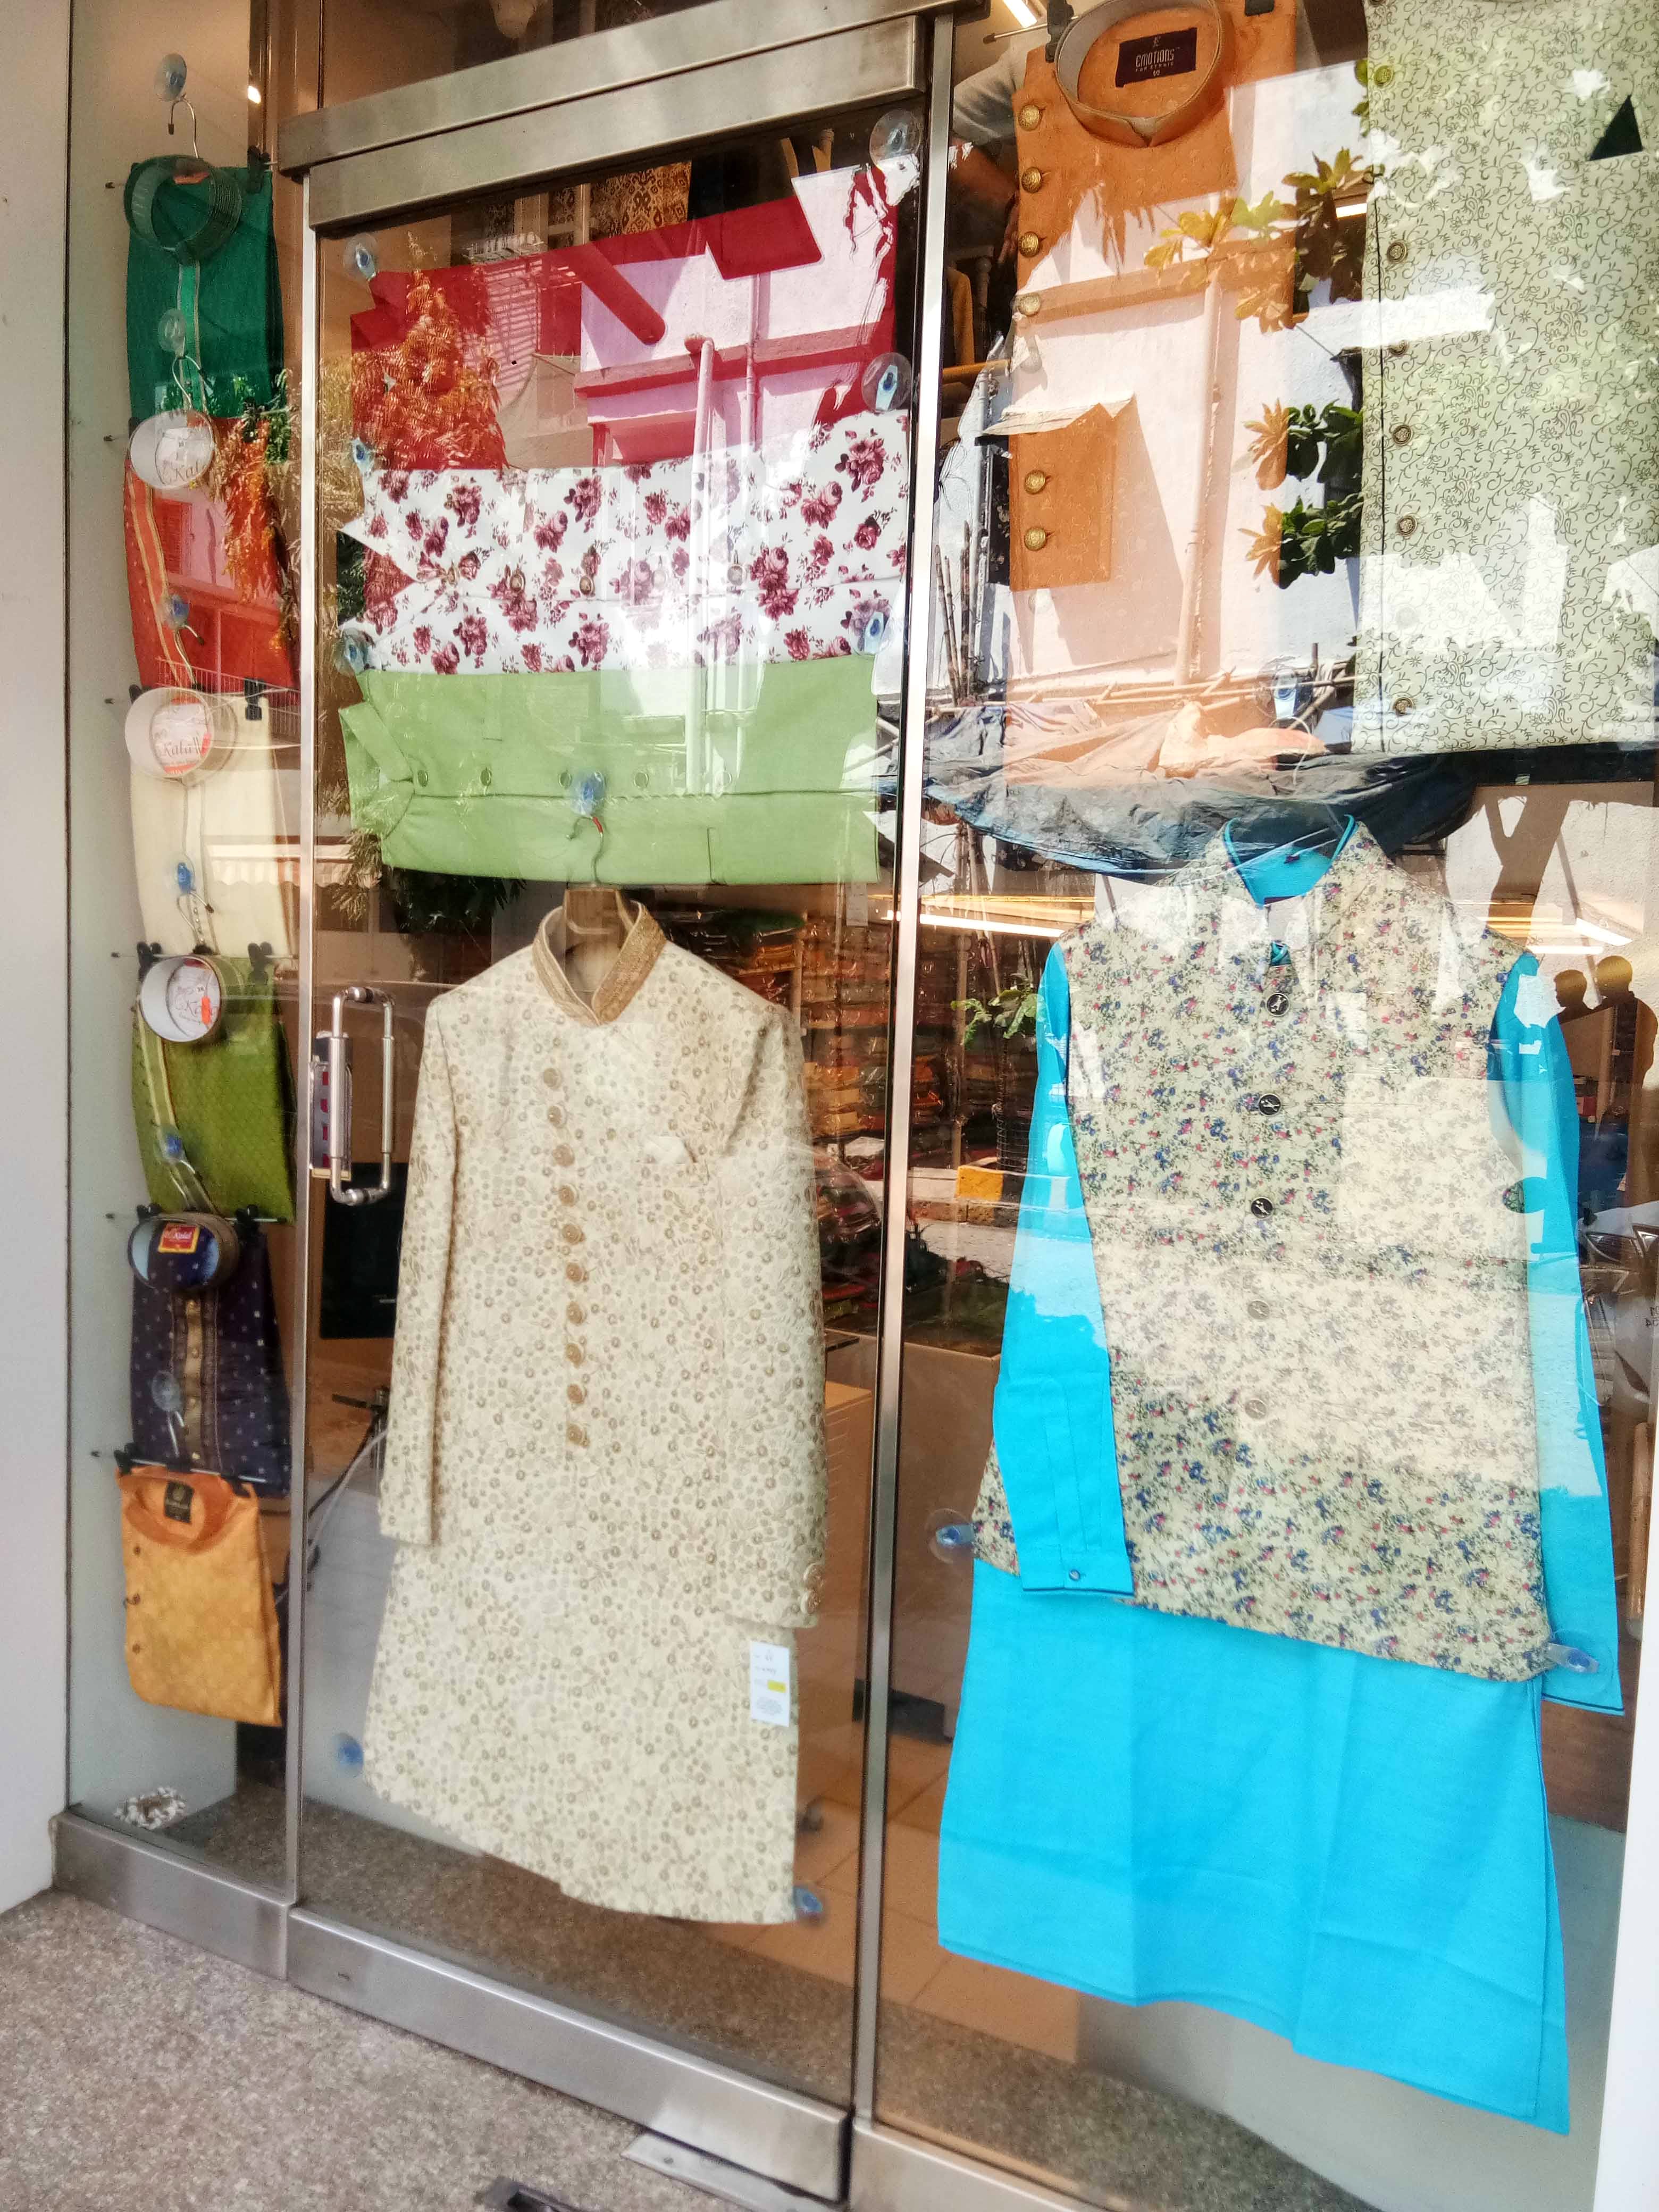 Green,Boutique,Fashion,Room,Clothes hanger,Display window,Textile,Door,T-shirt,Window